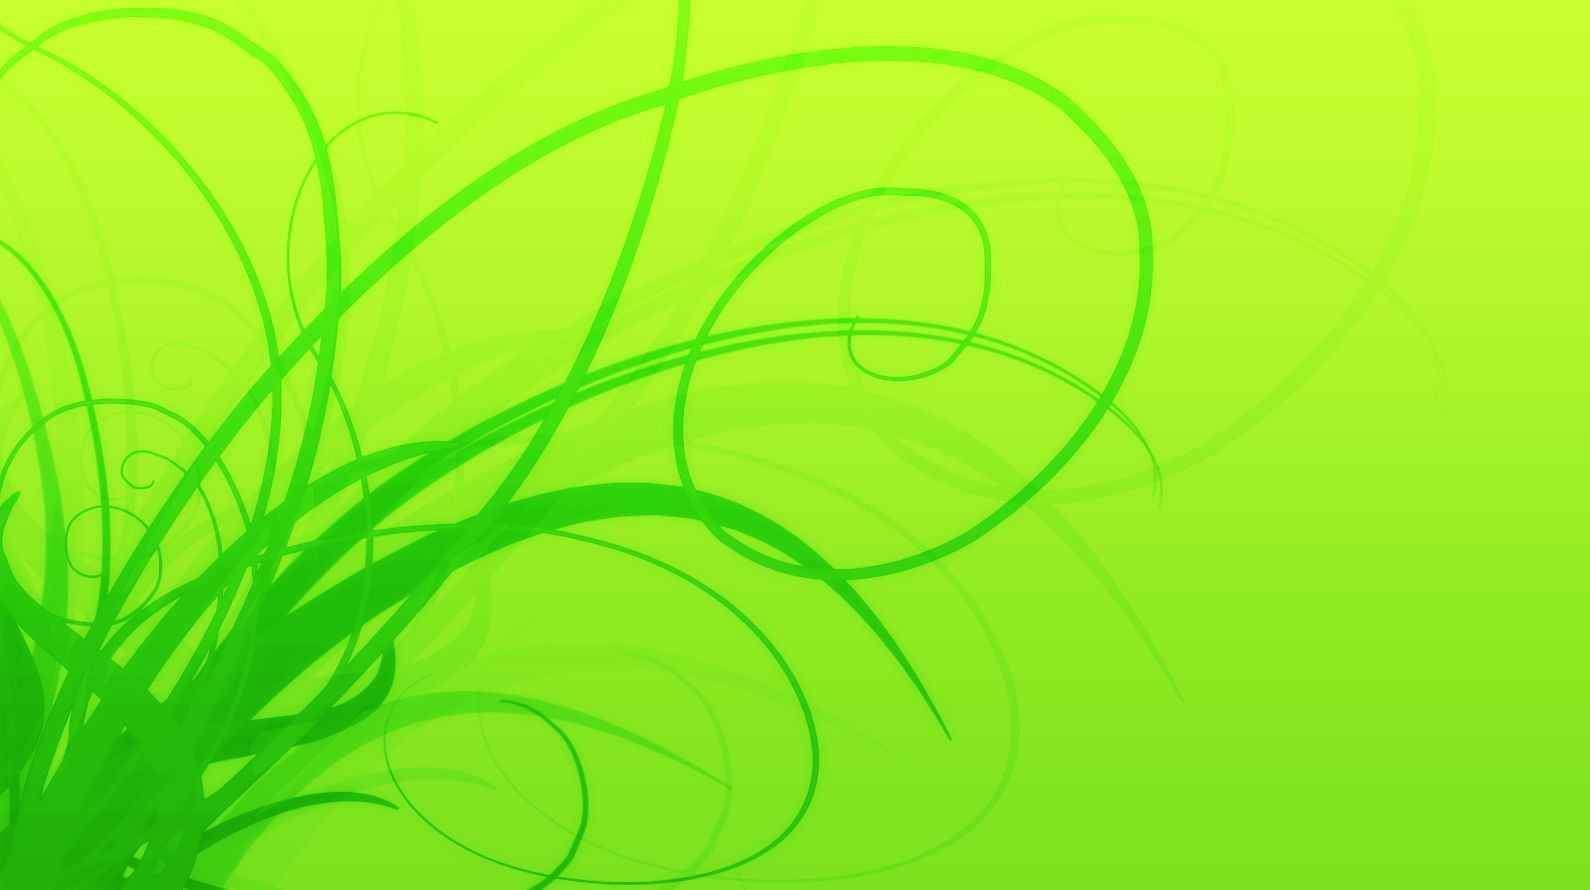 Free Bright Neon Green Foliage Swirls Wallpaper from ...